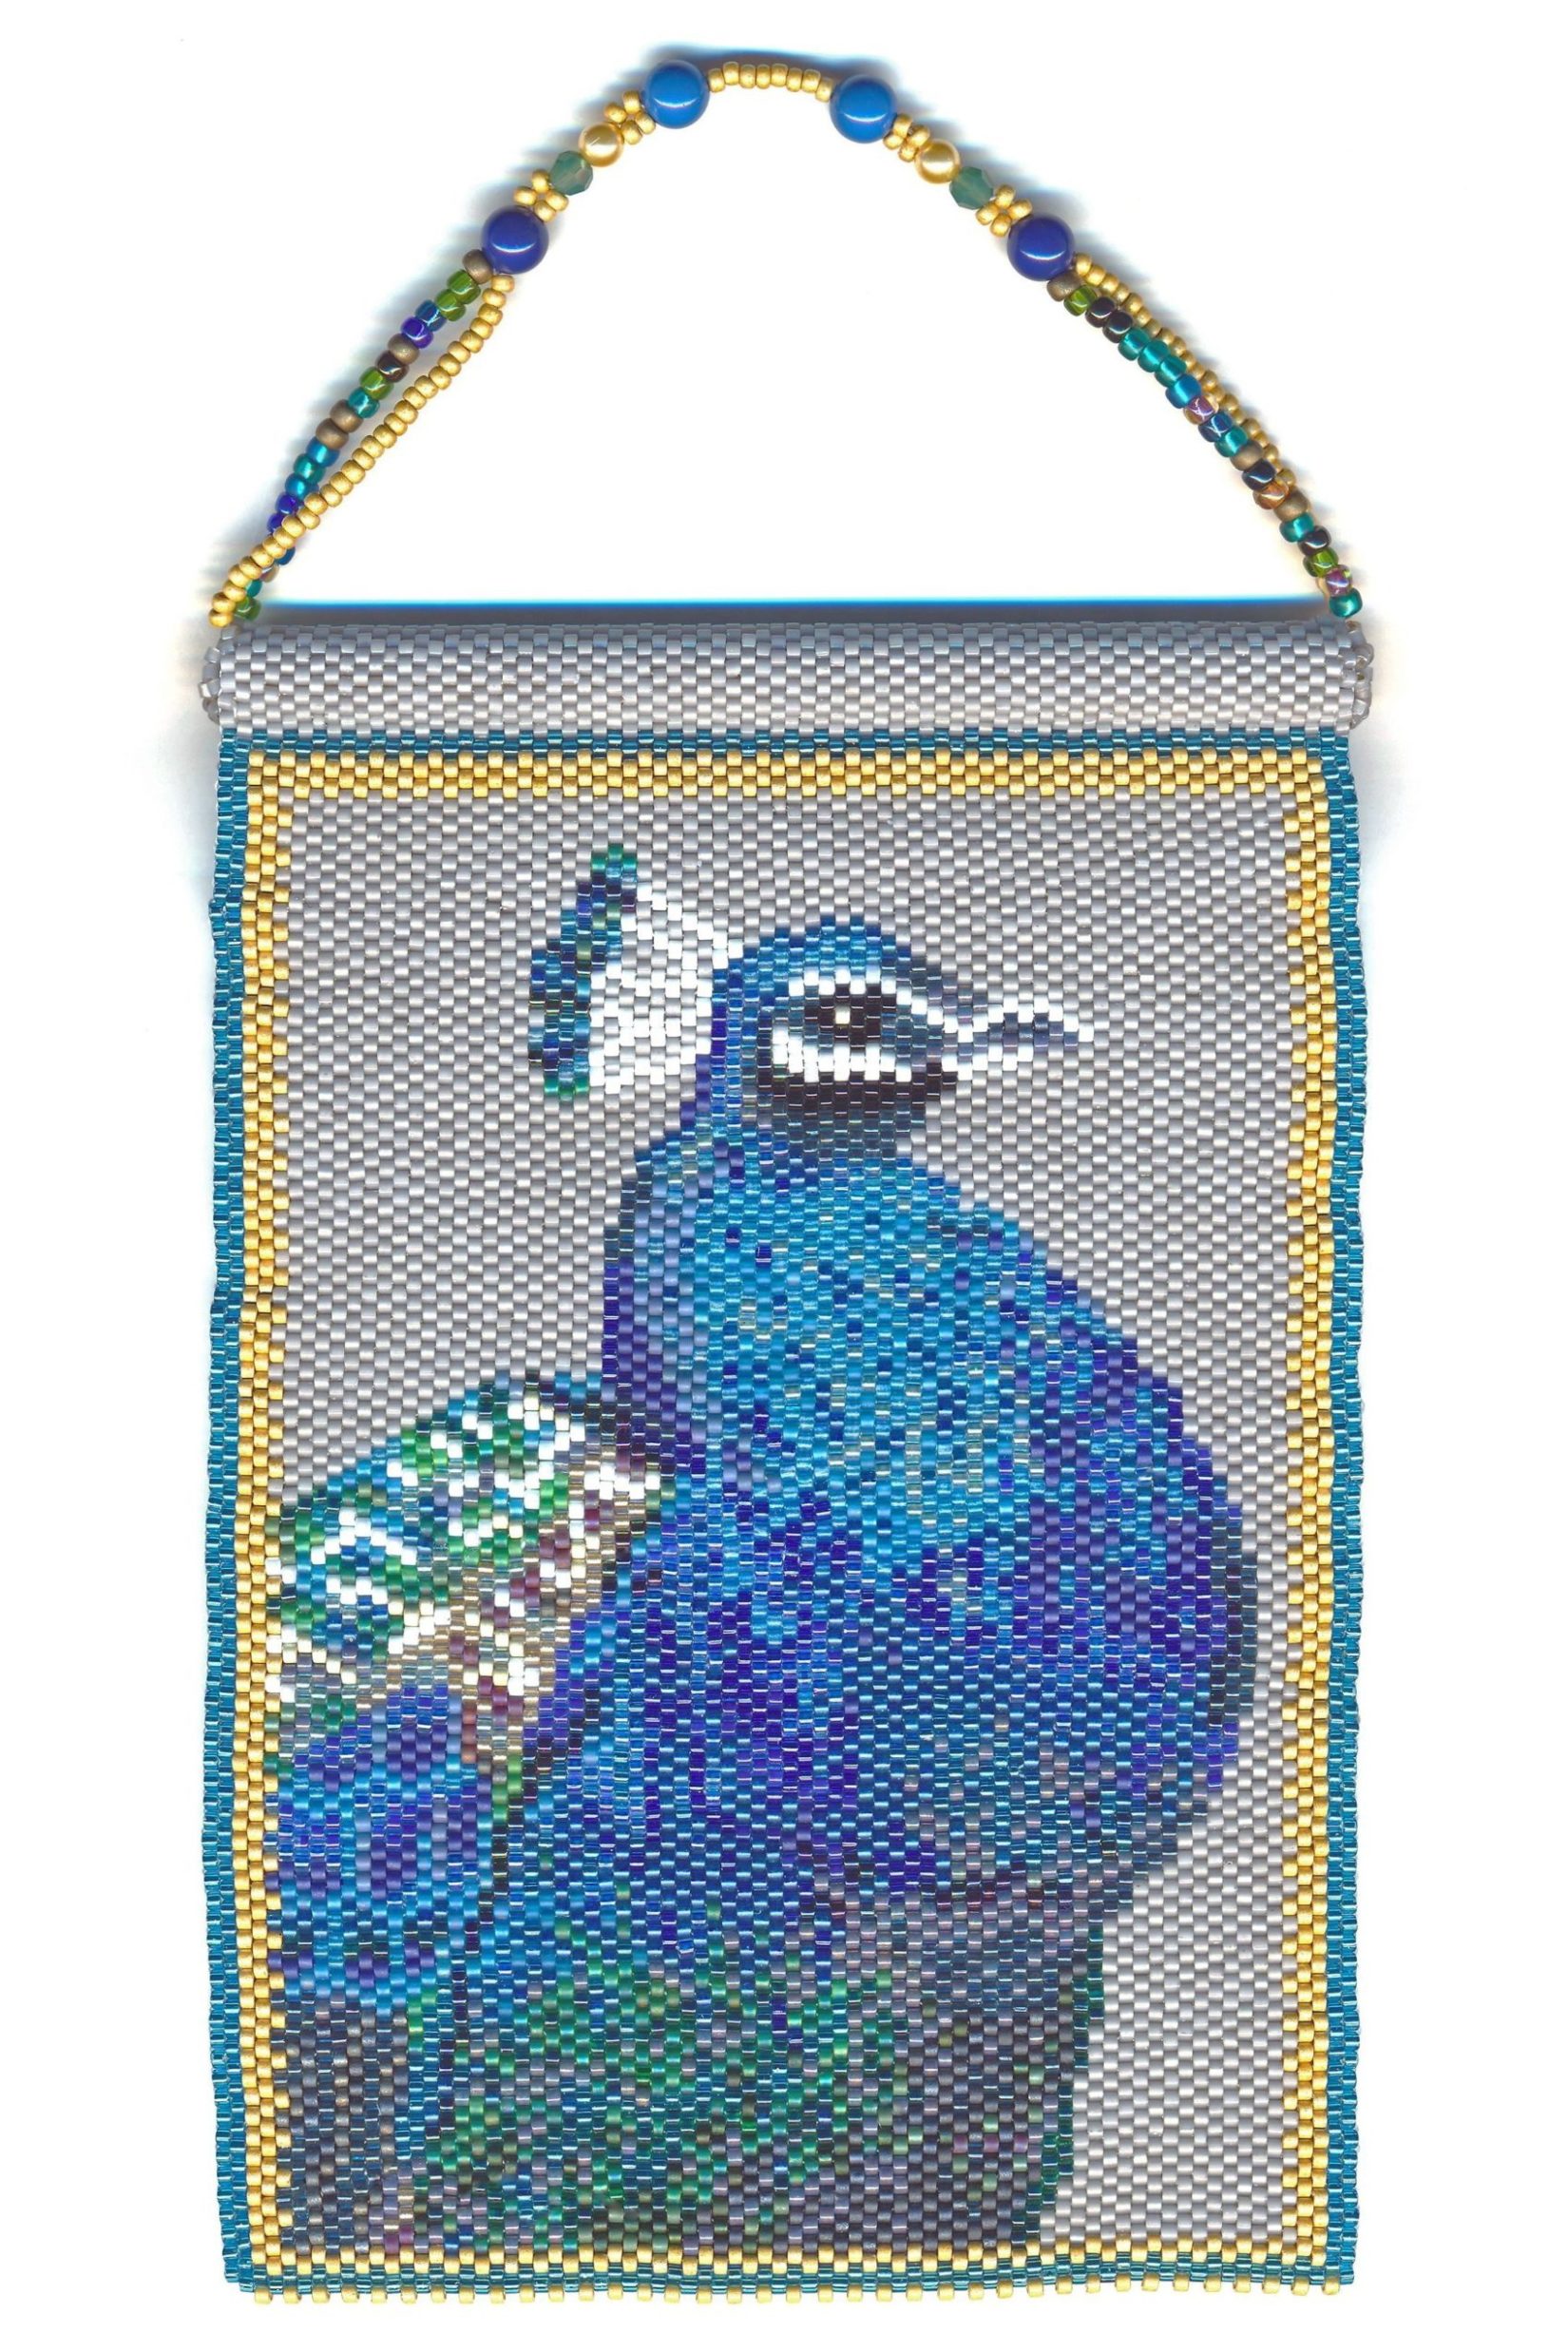 Peacock Beaded Panel Tapestry Wall Art Bird